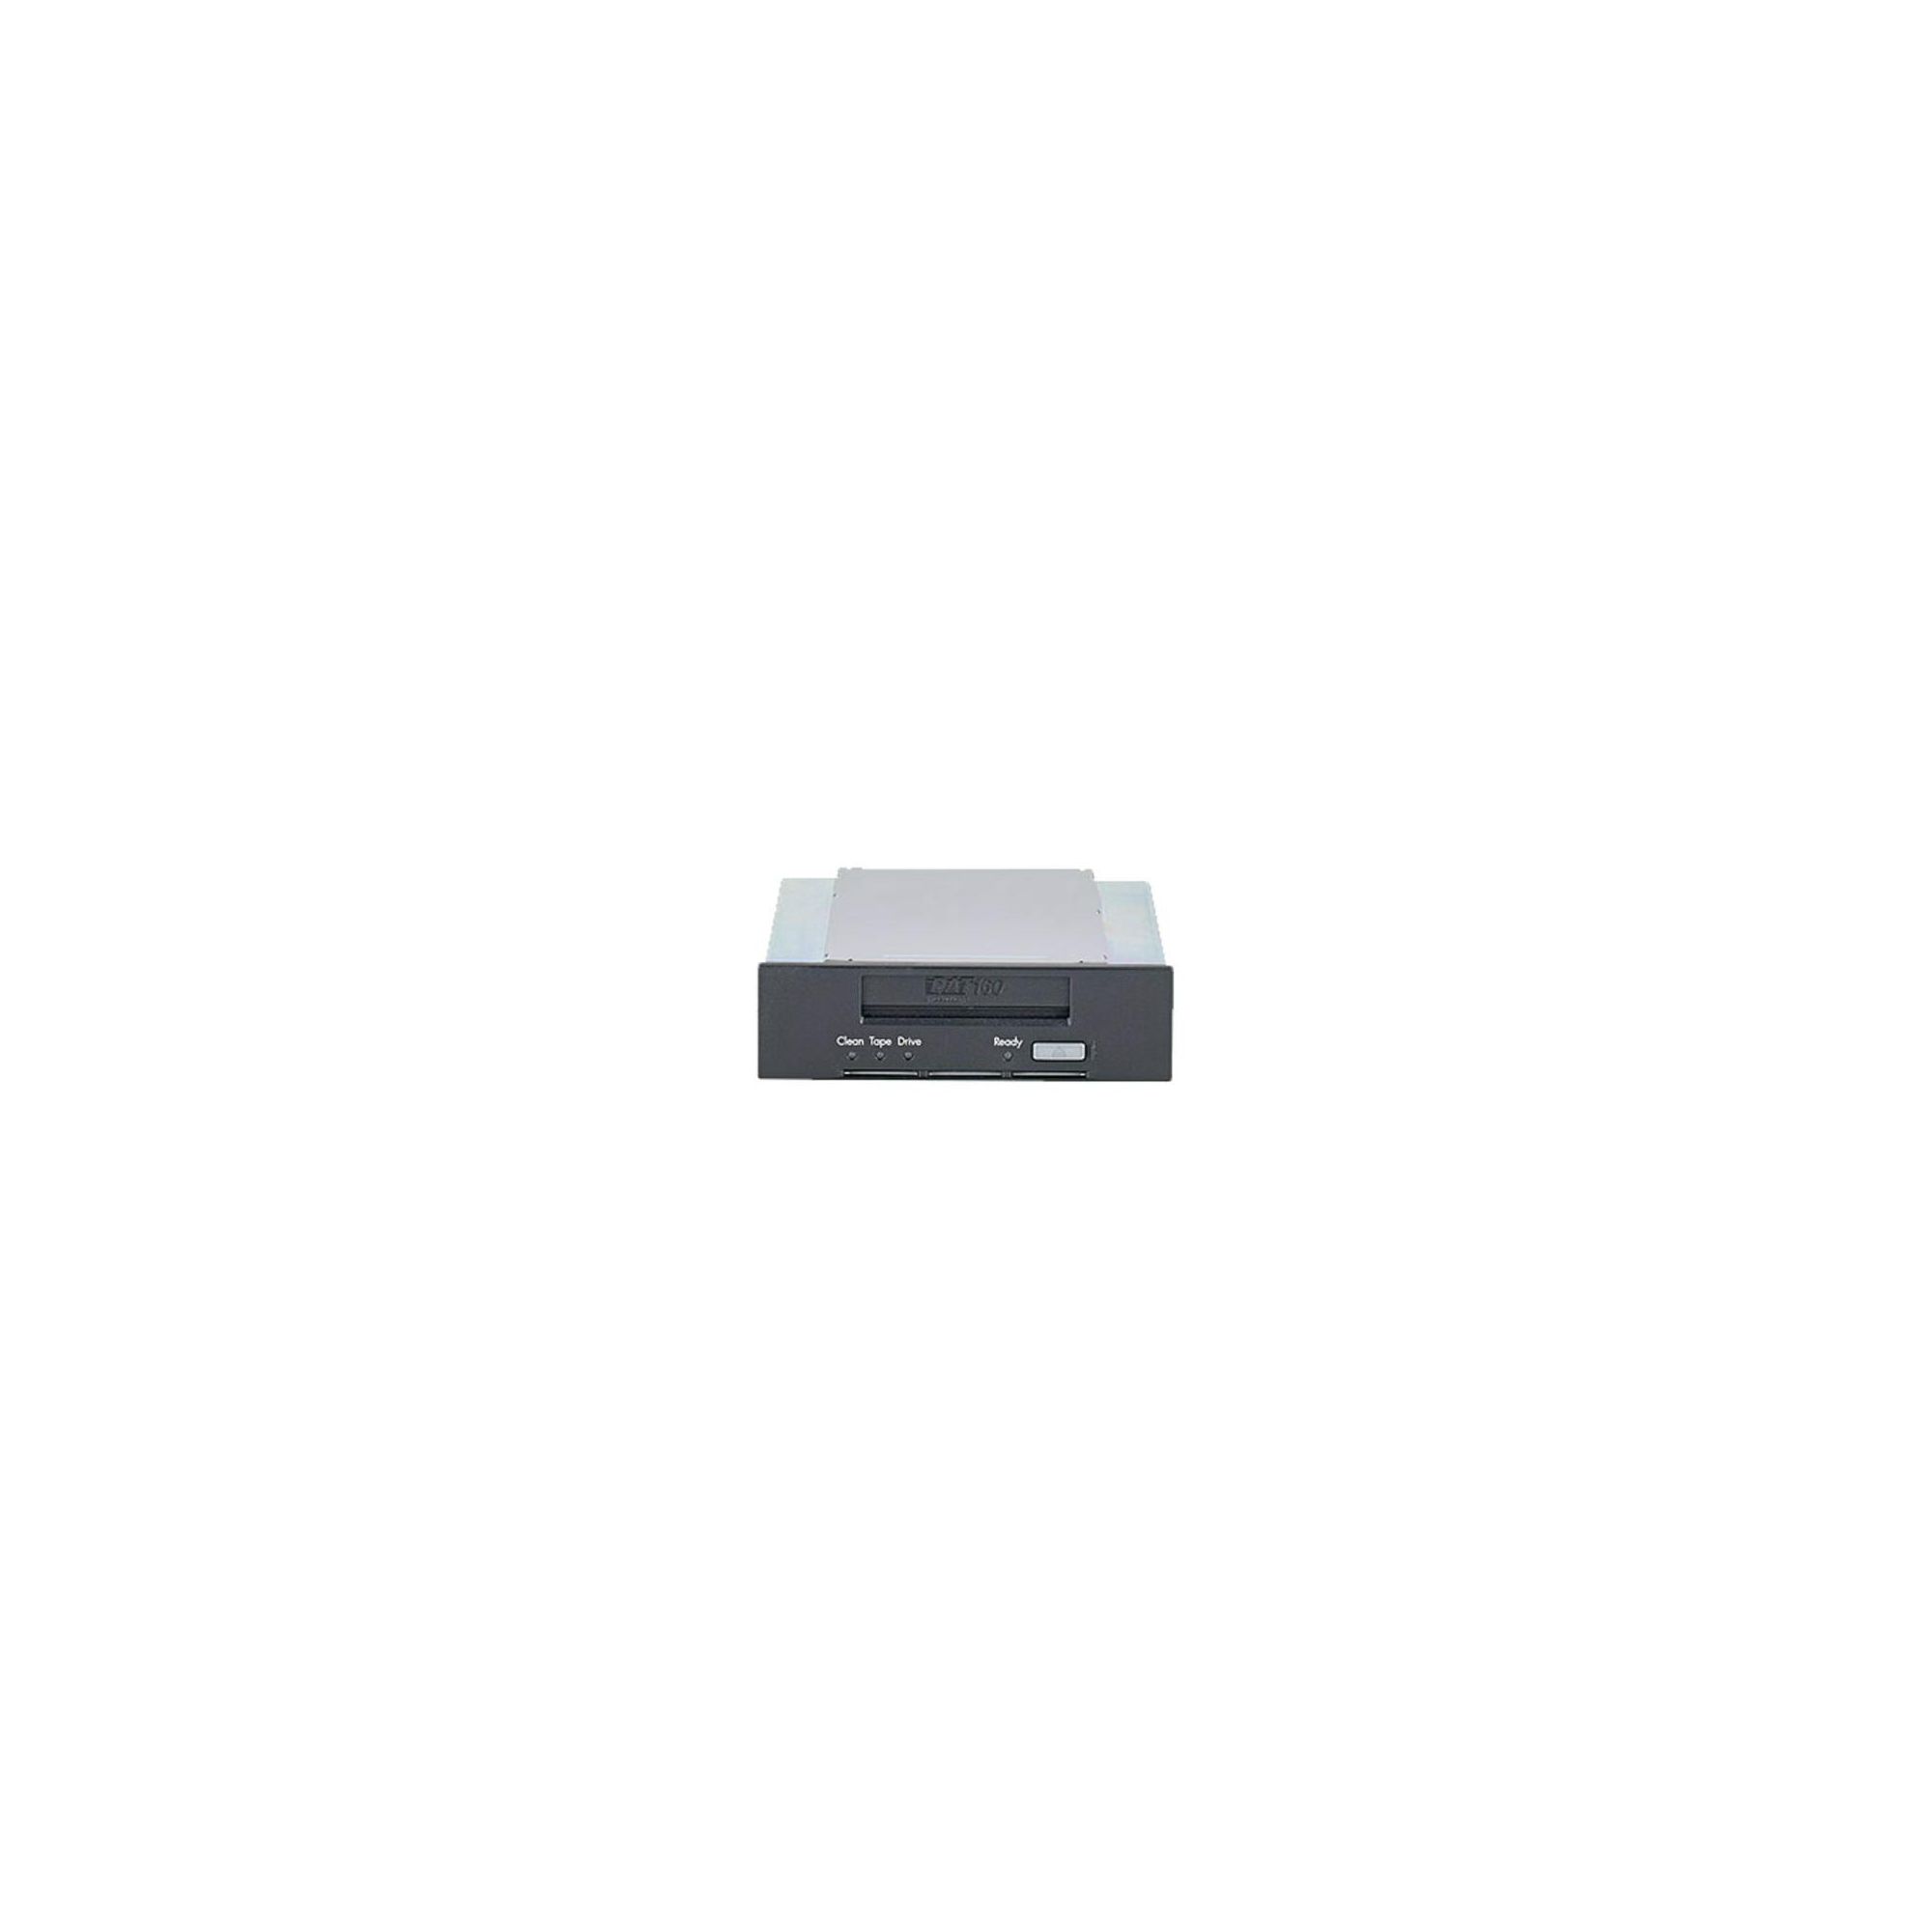 Freecom DAT-160i 80/160GB SCSI Tape Drive (Internal) at Tesco Direct